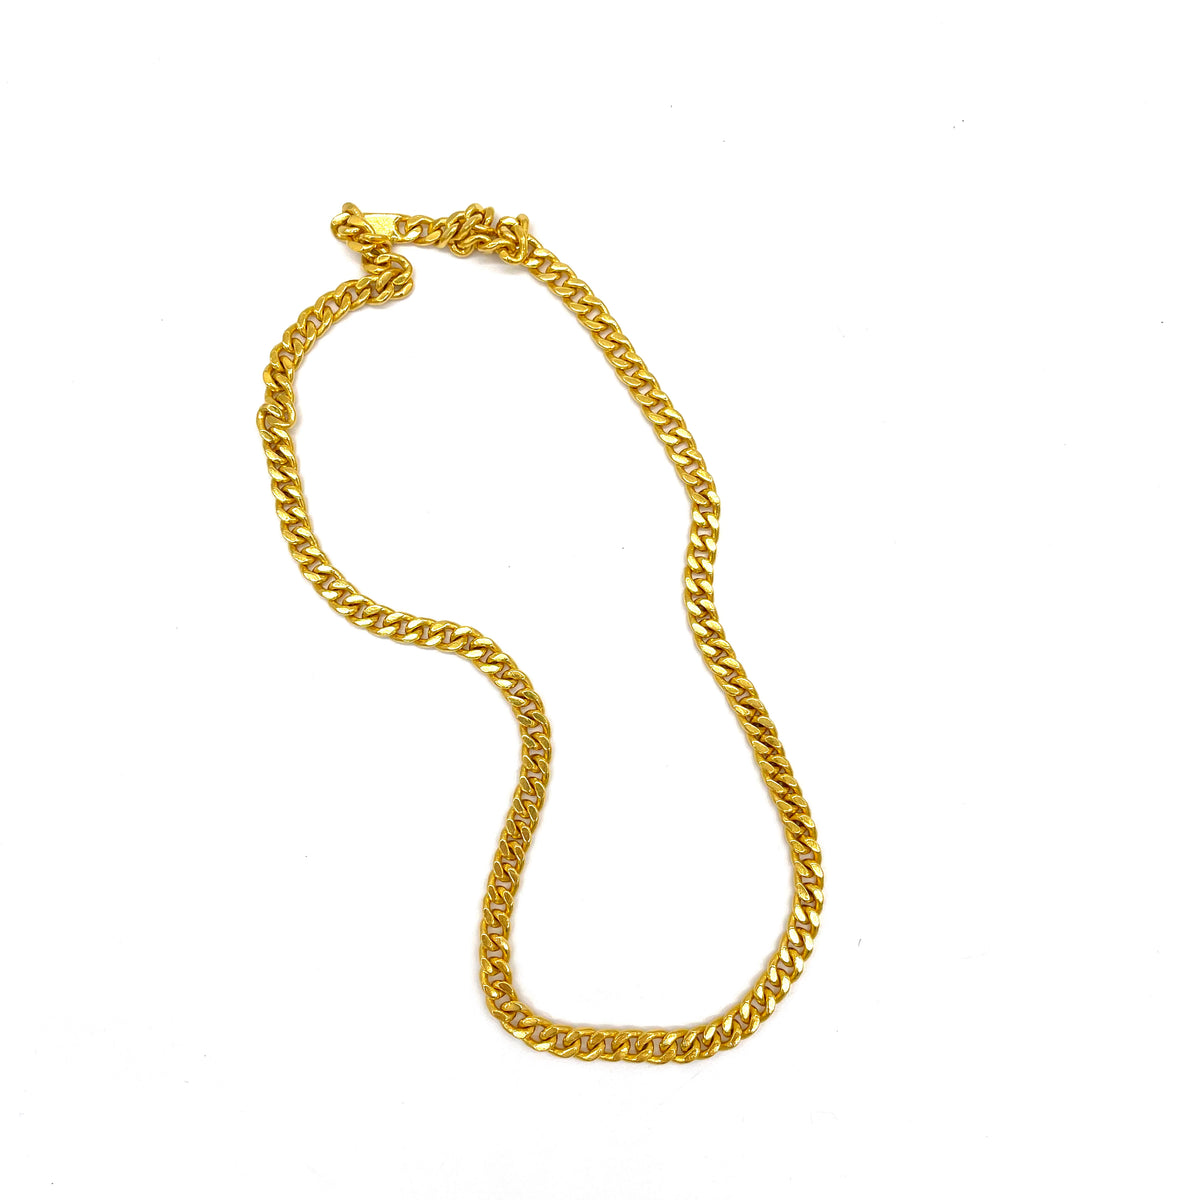 Gold necklace 187.7 grams $63 per gram 24k